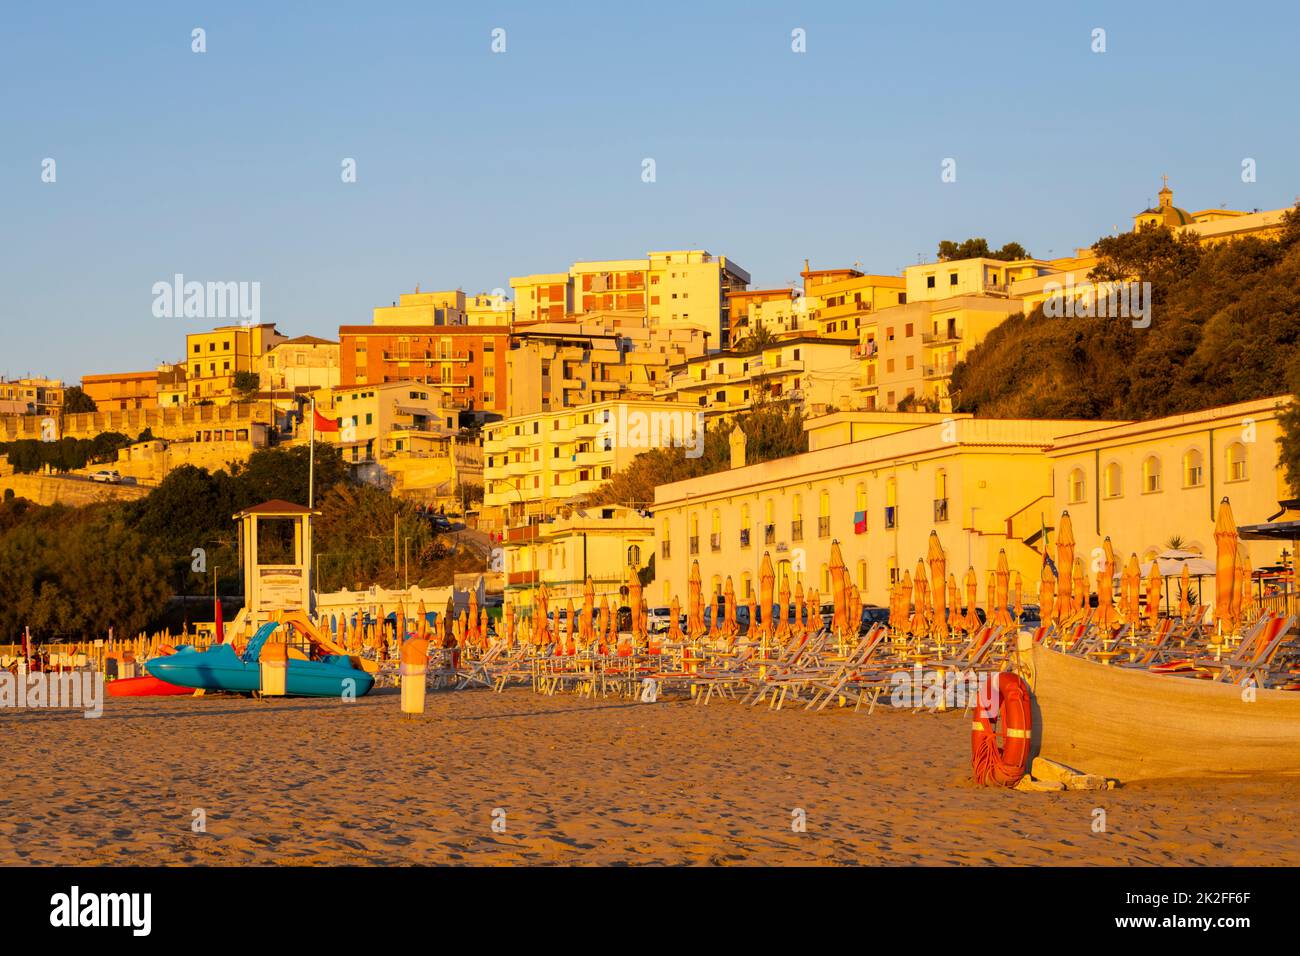 Beach in Rodi Garganico, Apulia, Italy Stock Photo